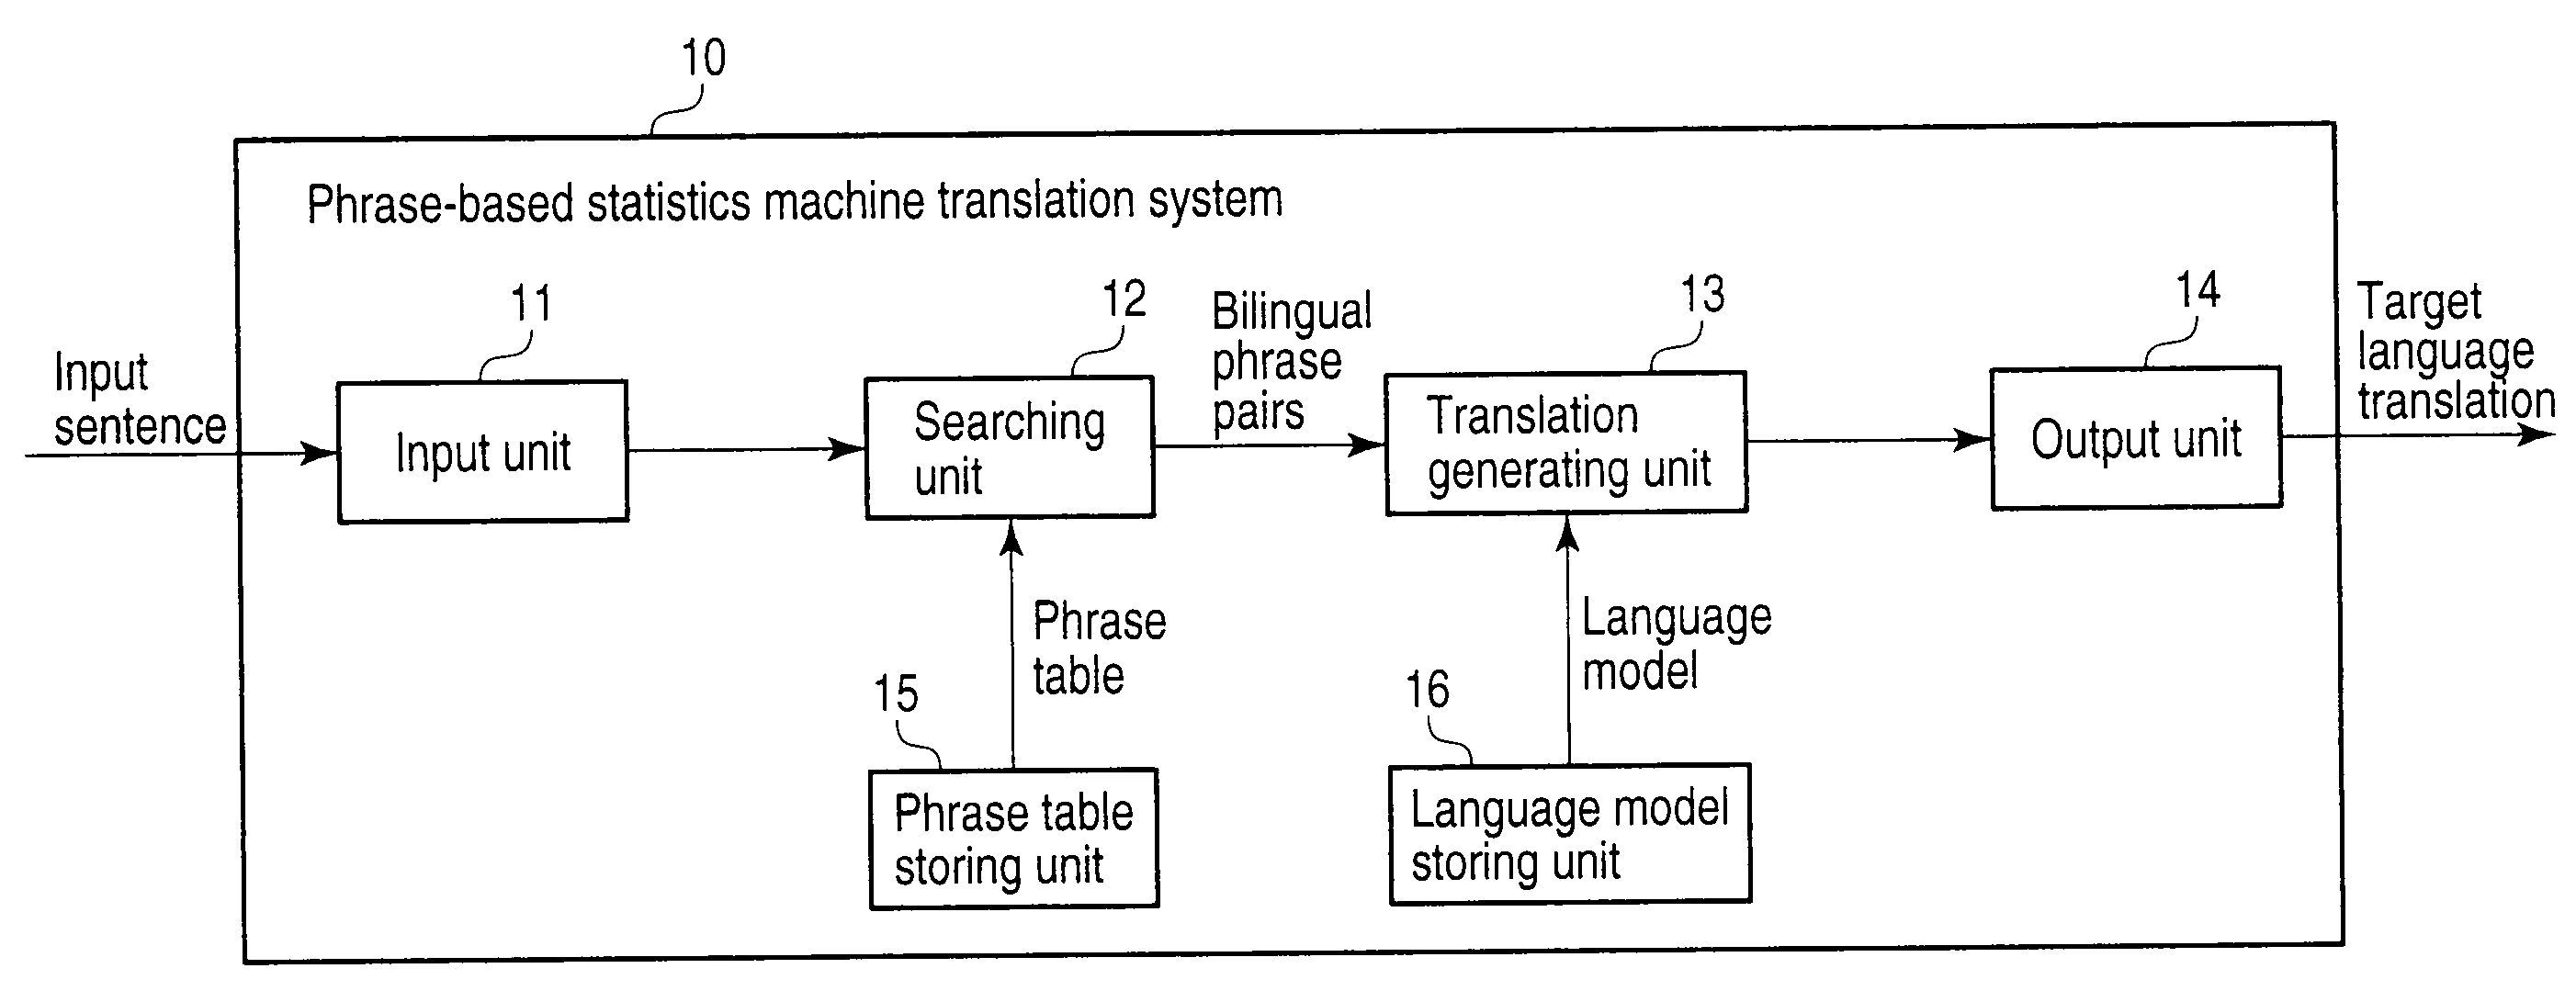 Phrase-based statistics machine translation method and system